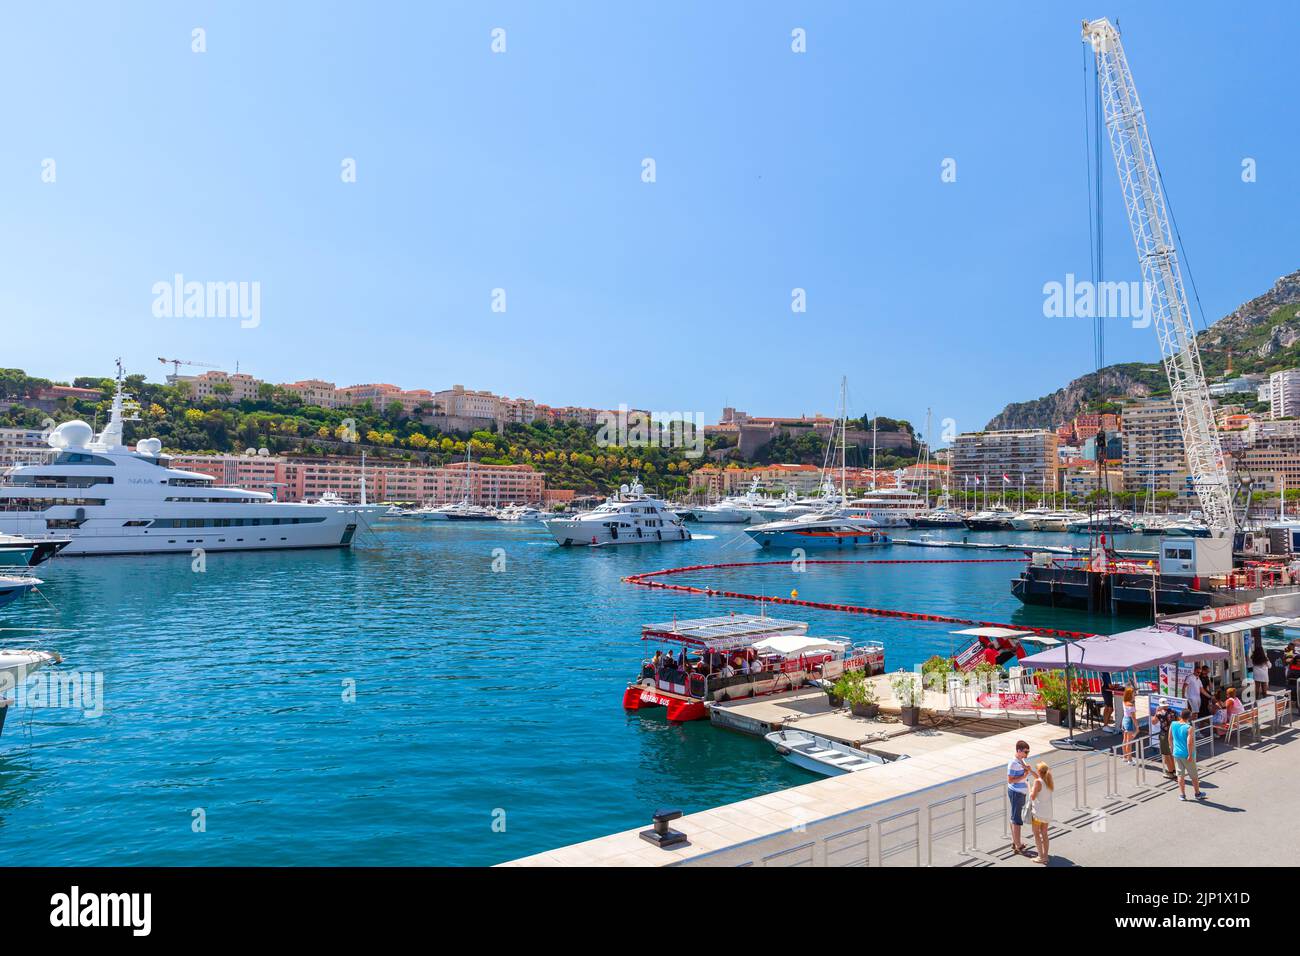 Monte Carlo, Monaco - August 15, 2018: Tourists wait for water bus boarding in Port Hercule of Monte Carlo Stock Photo